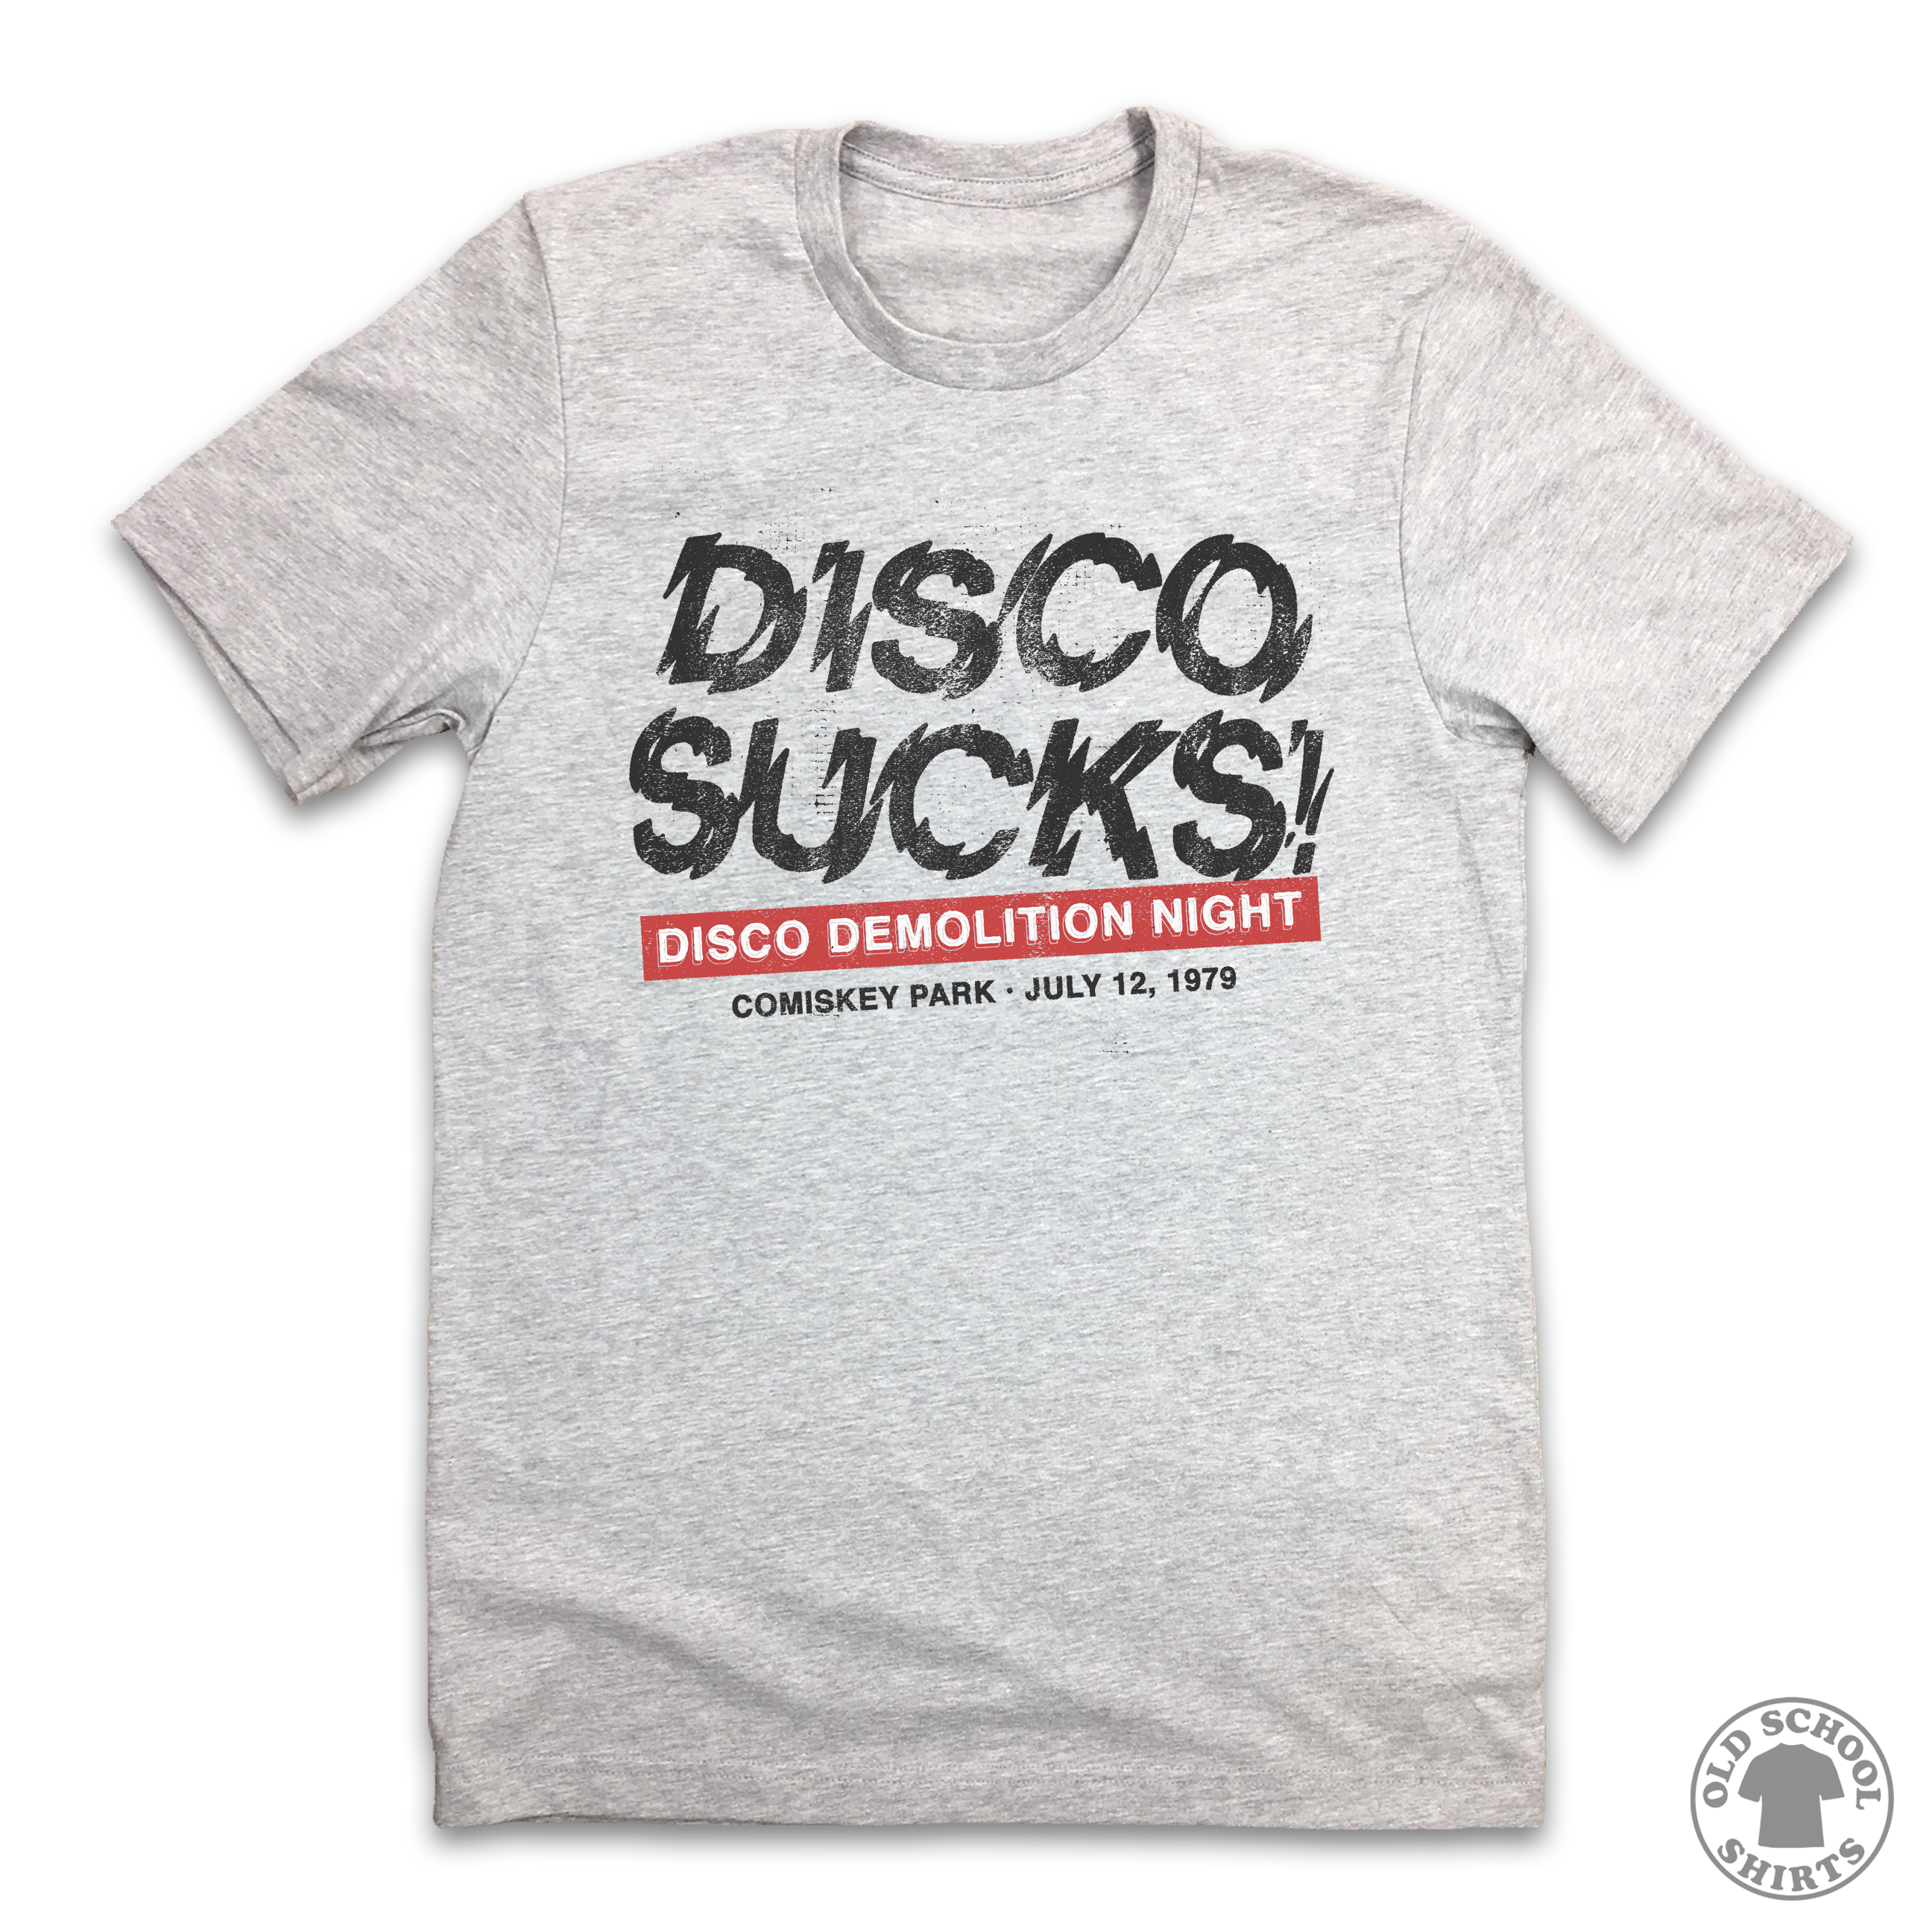 Disco Sucks! - Disco Demolition Night - Old School Shirts- Retro Sports T Shirts